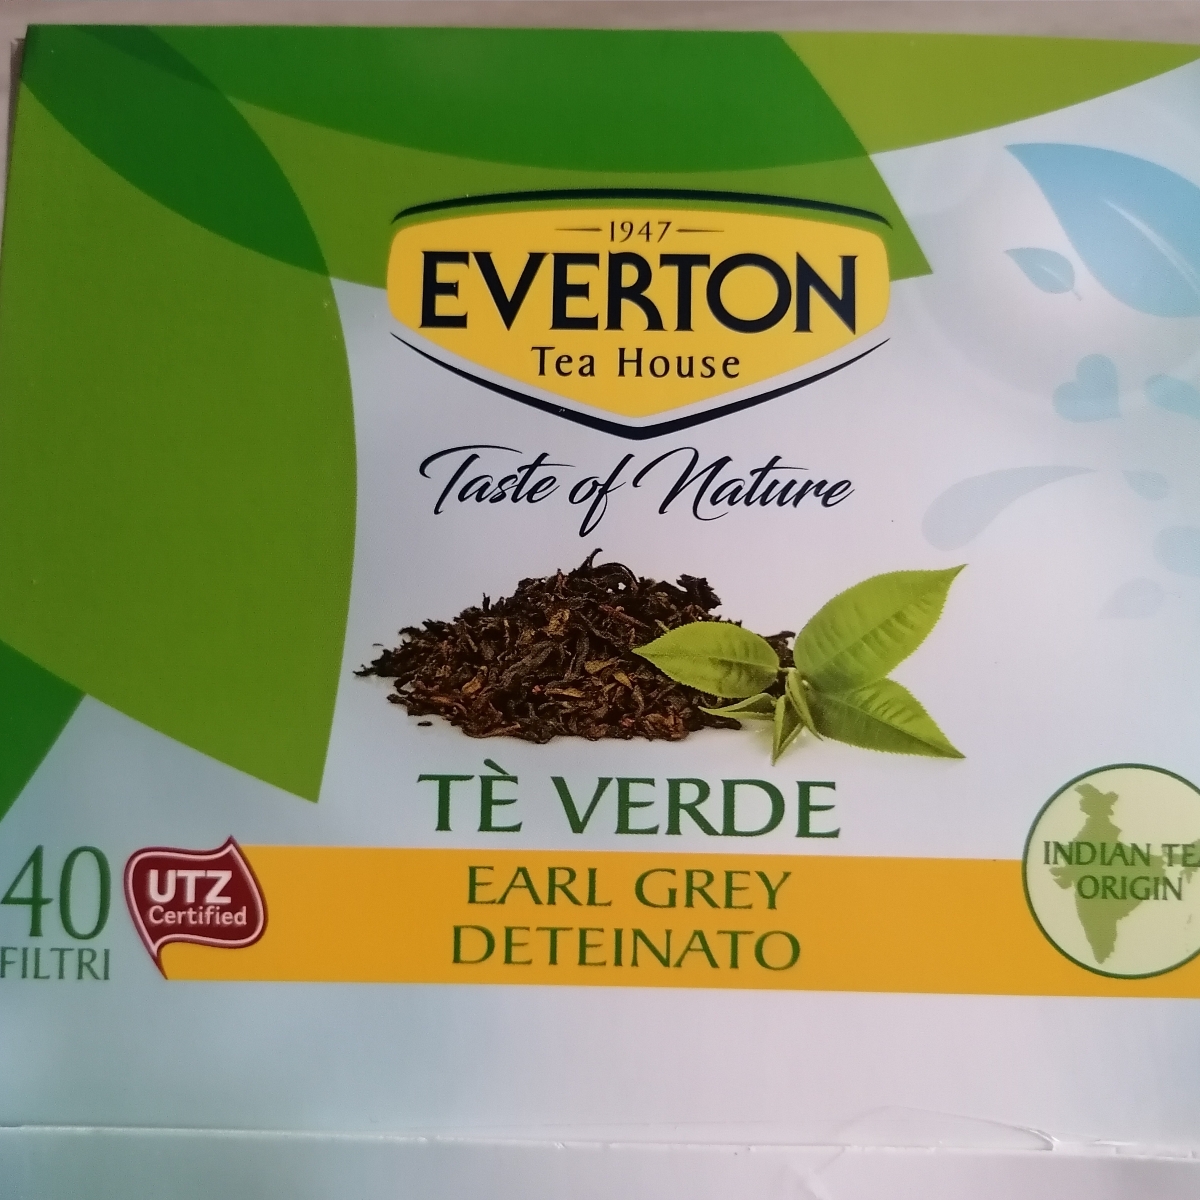 Everton tea house Tè verde Earl Grey deteinato Reviews